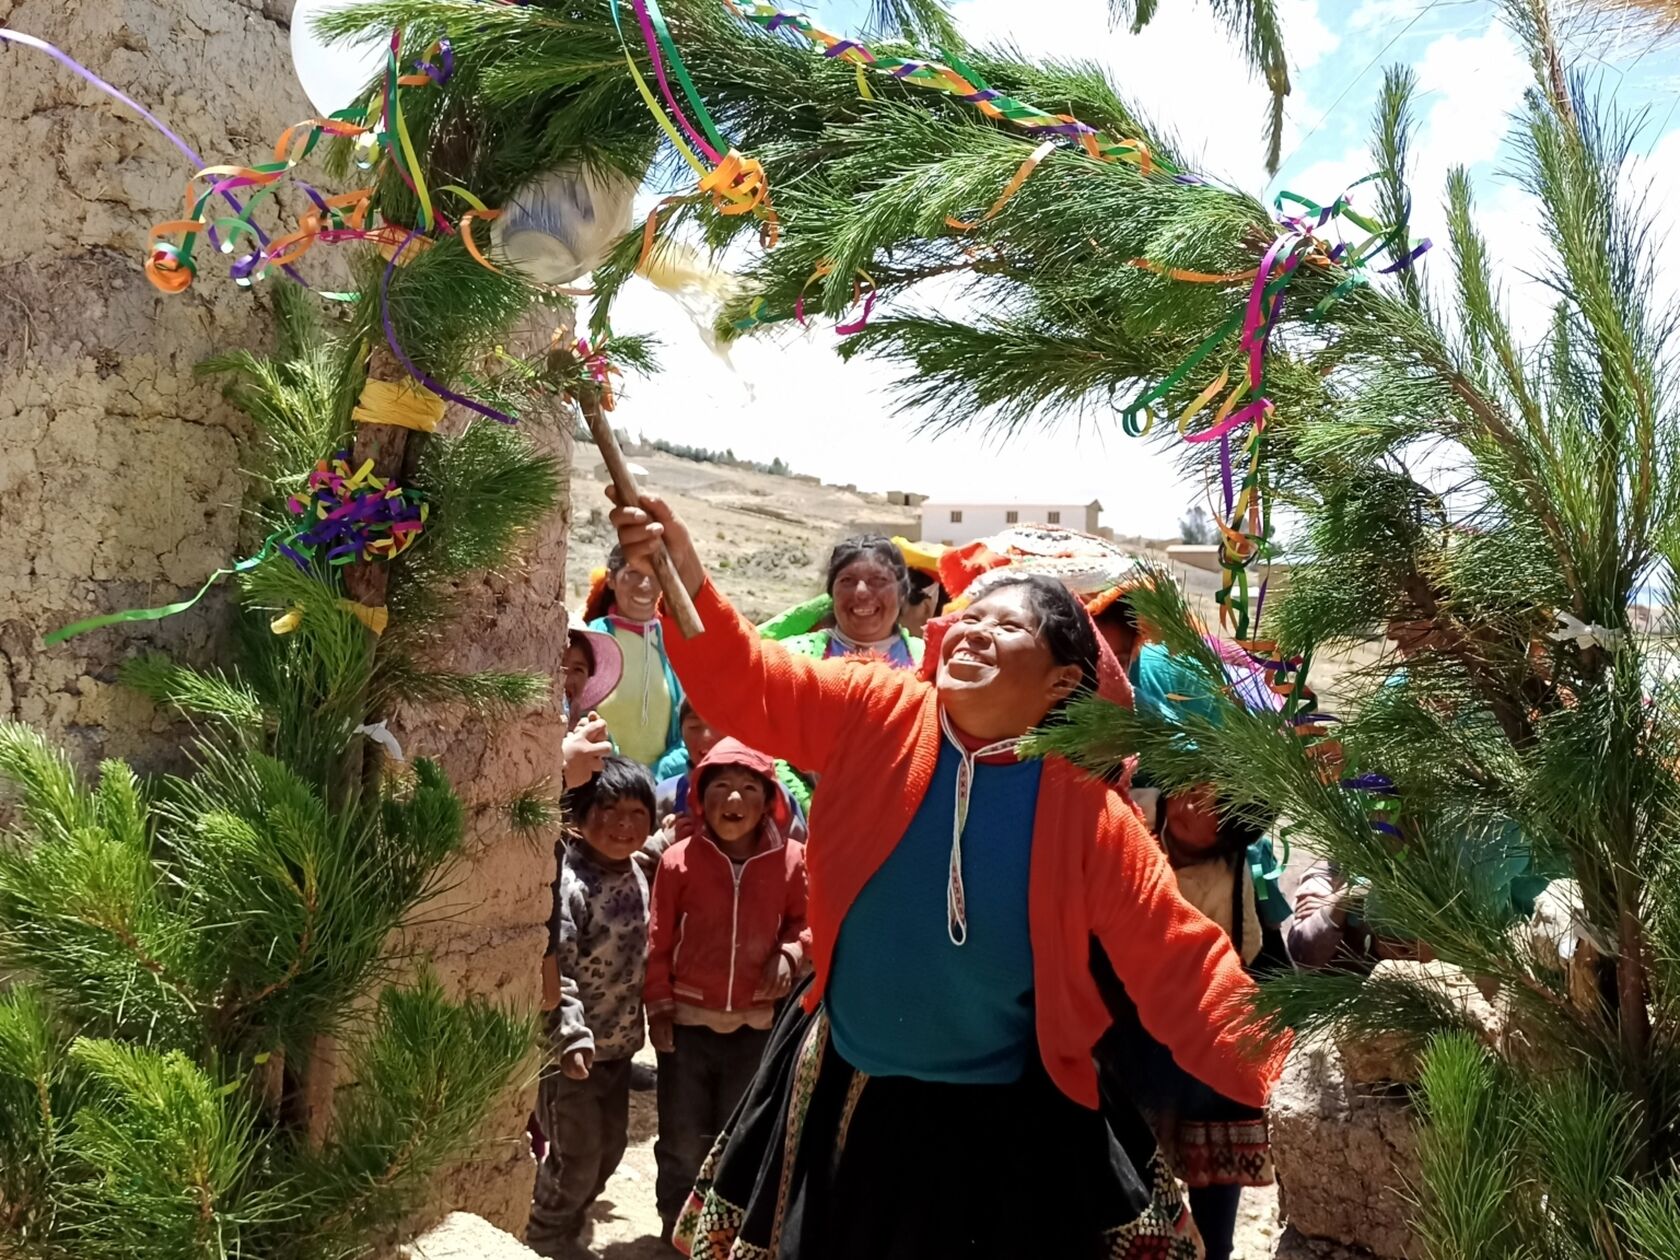 Inauguration of Munay T ikariy textile center in Huarqui community2